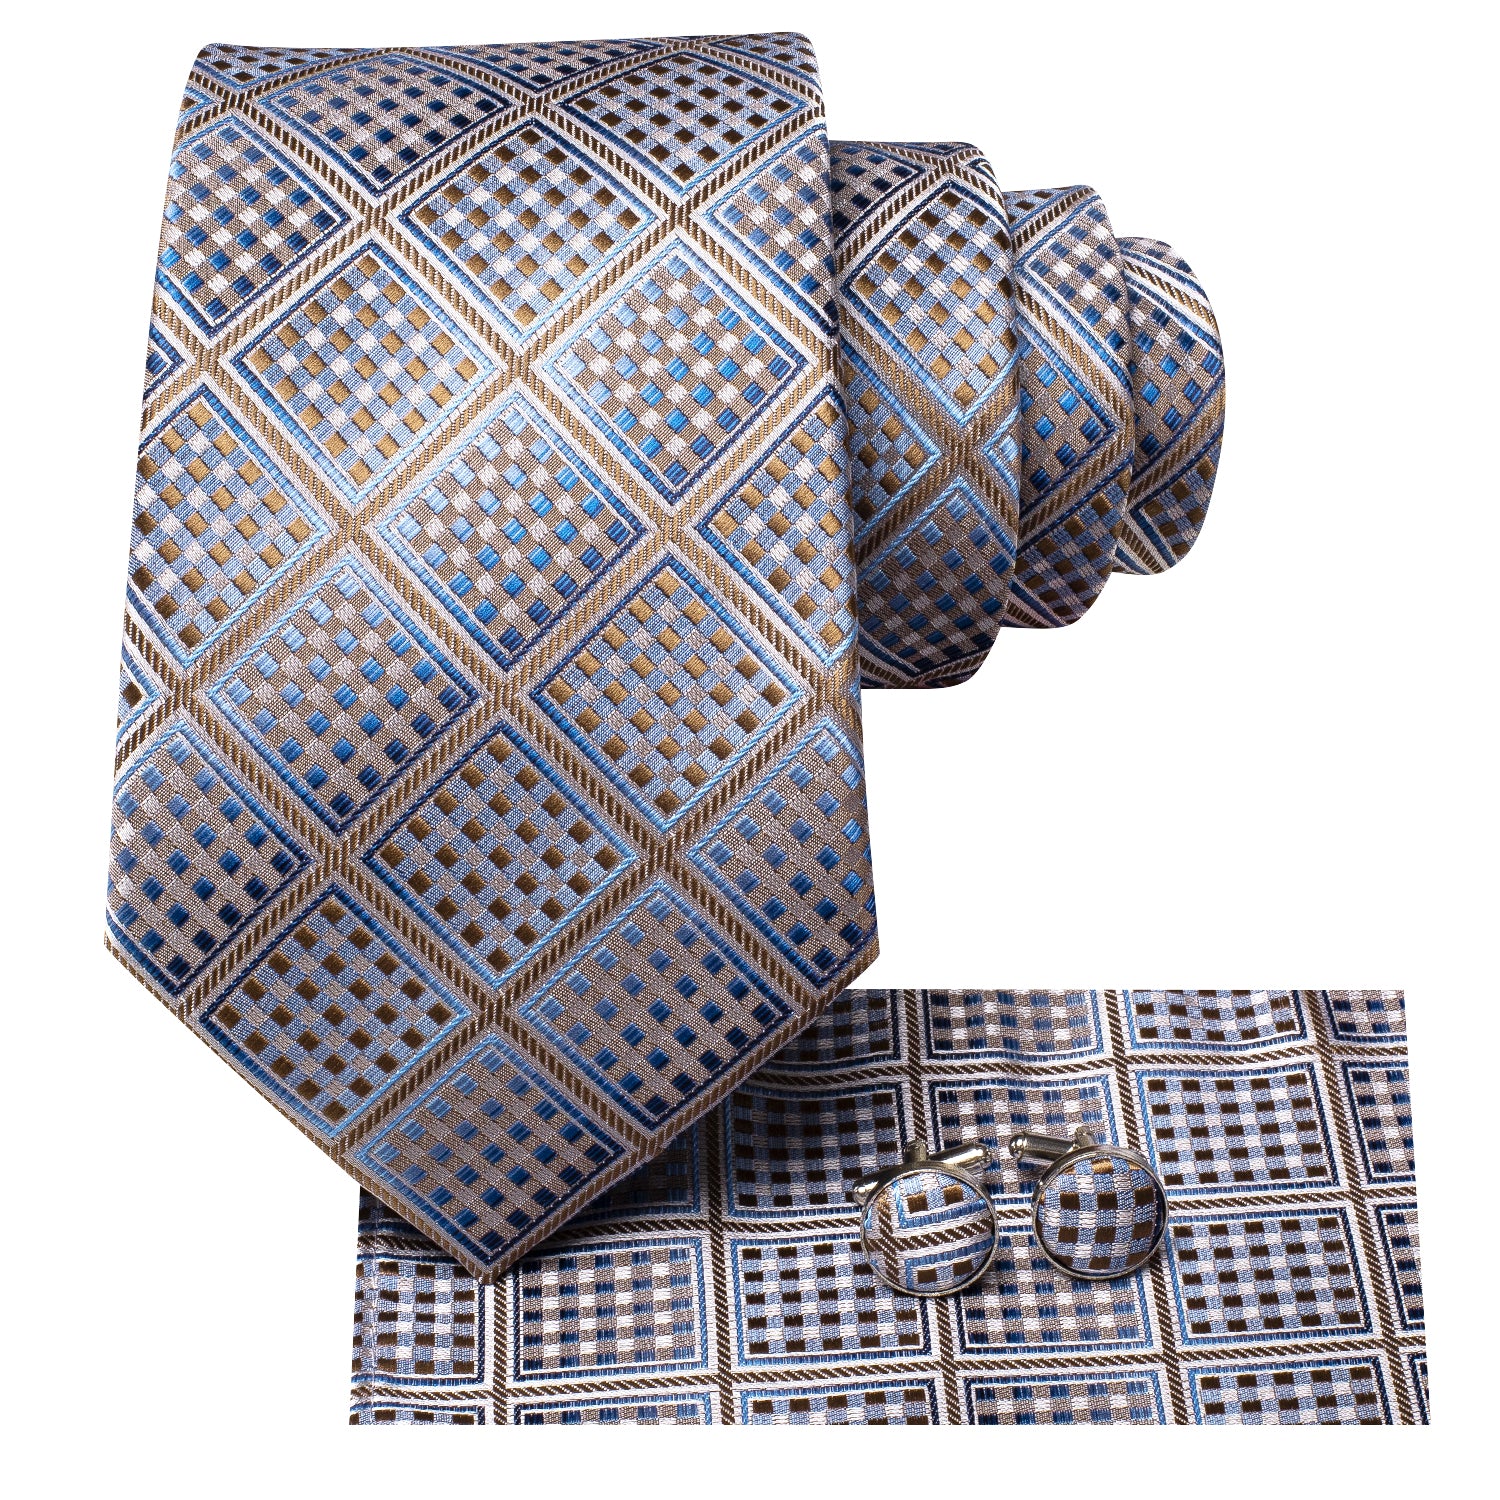 New Champagne Blue Plaid Tie Pocket Square Cufflinks Set